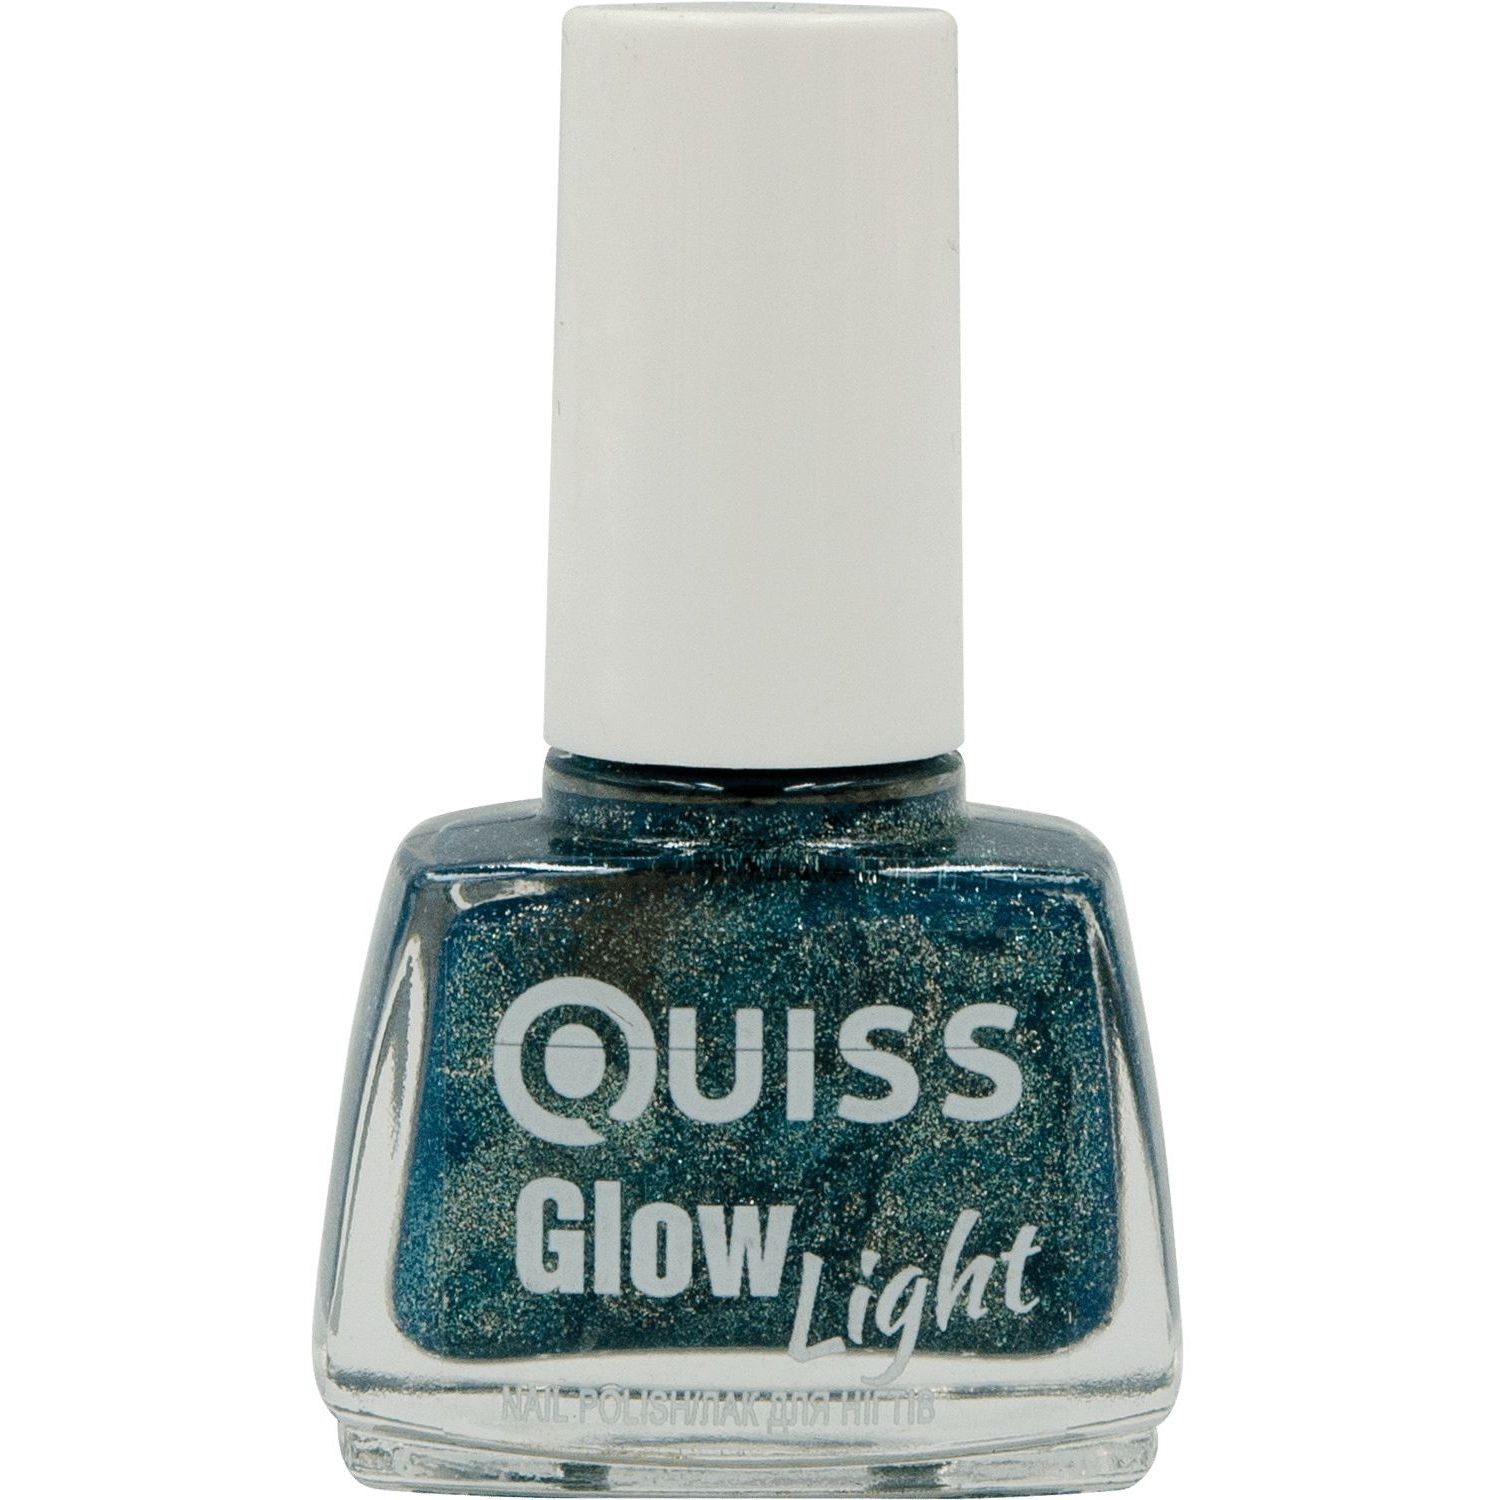 Лак для ногтей Quiss Glow Light тон 06, 6 мл - фото 1